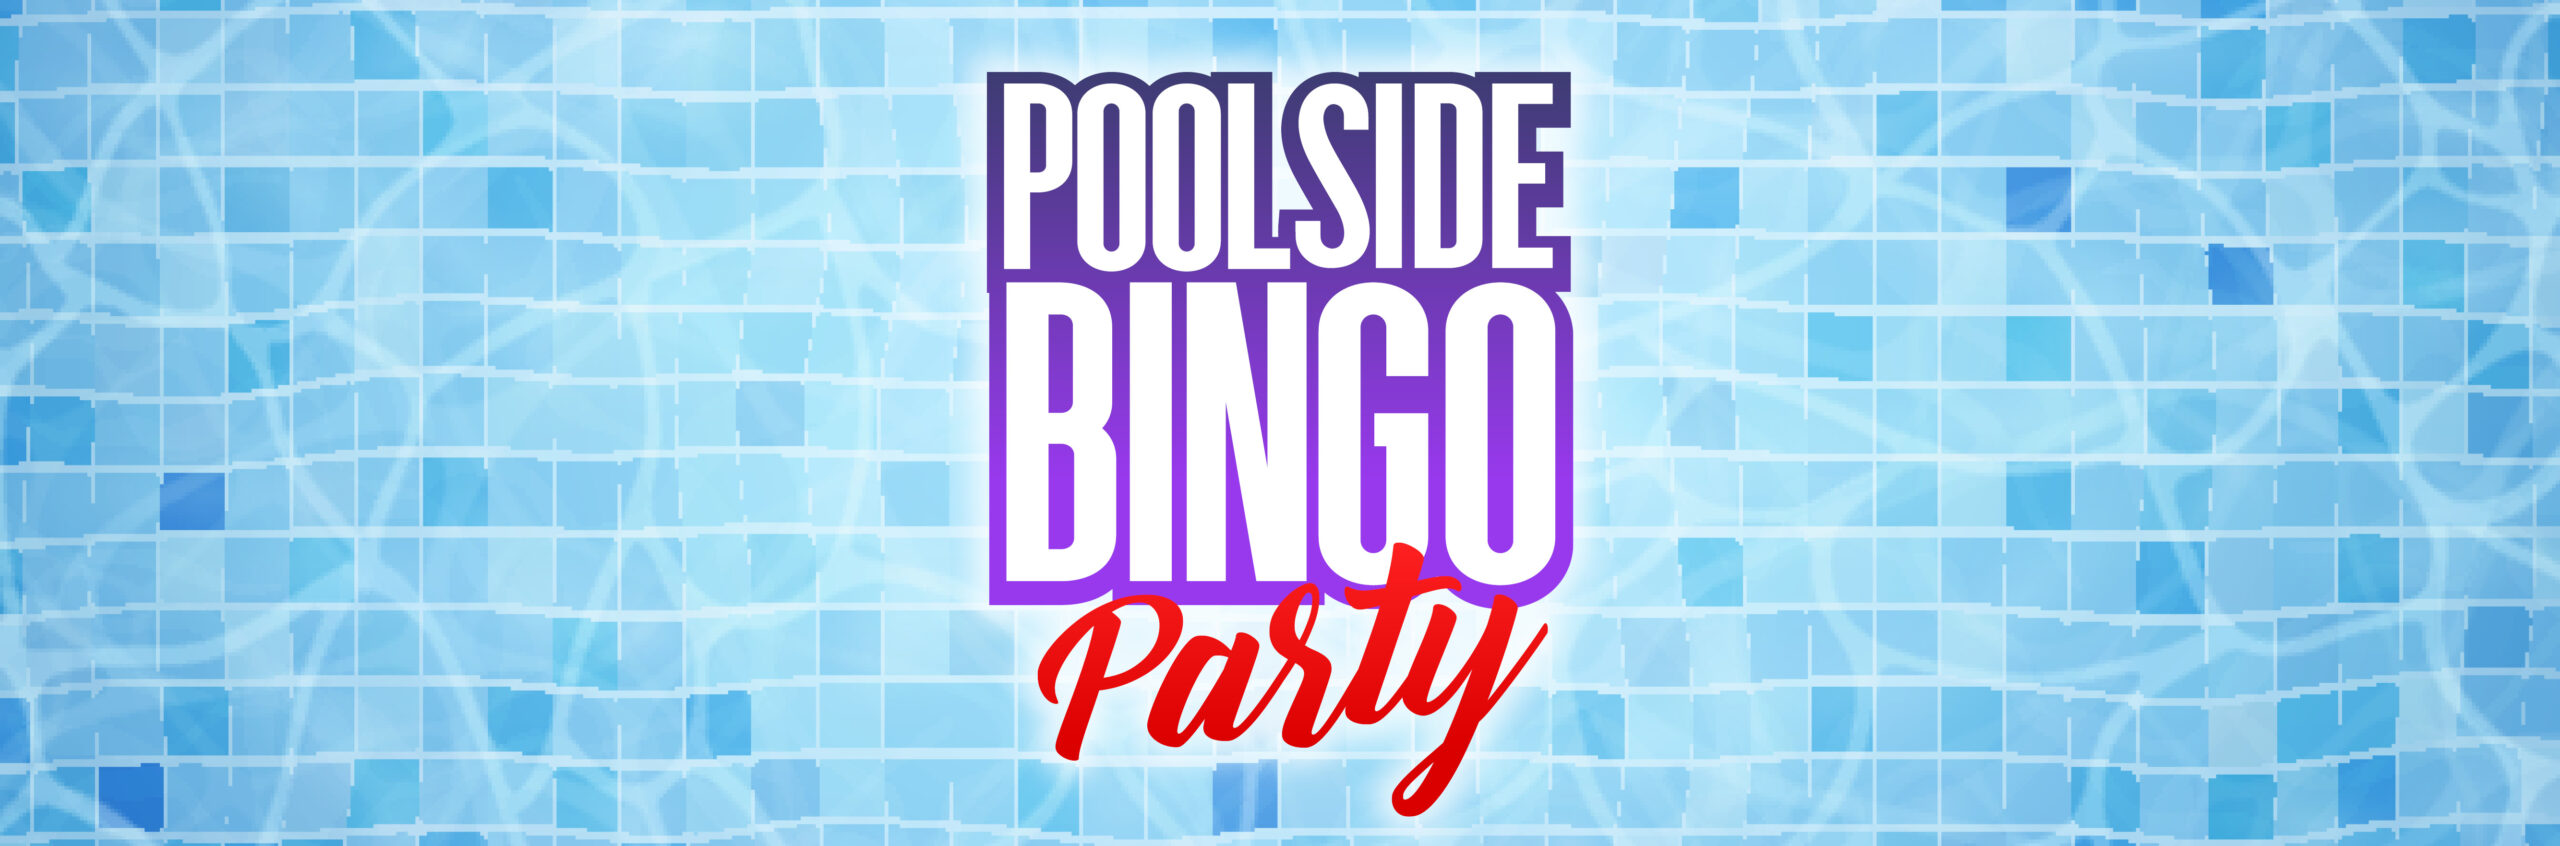 Poolside Bingo Party